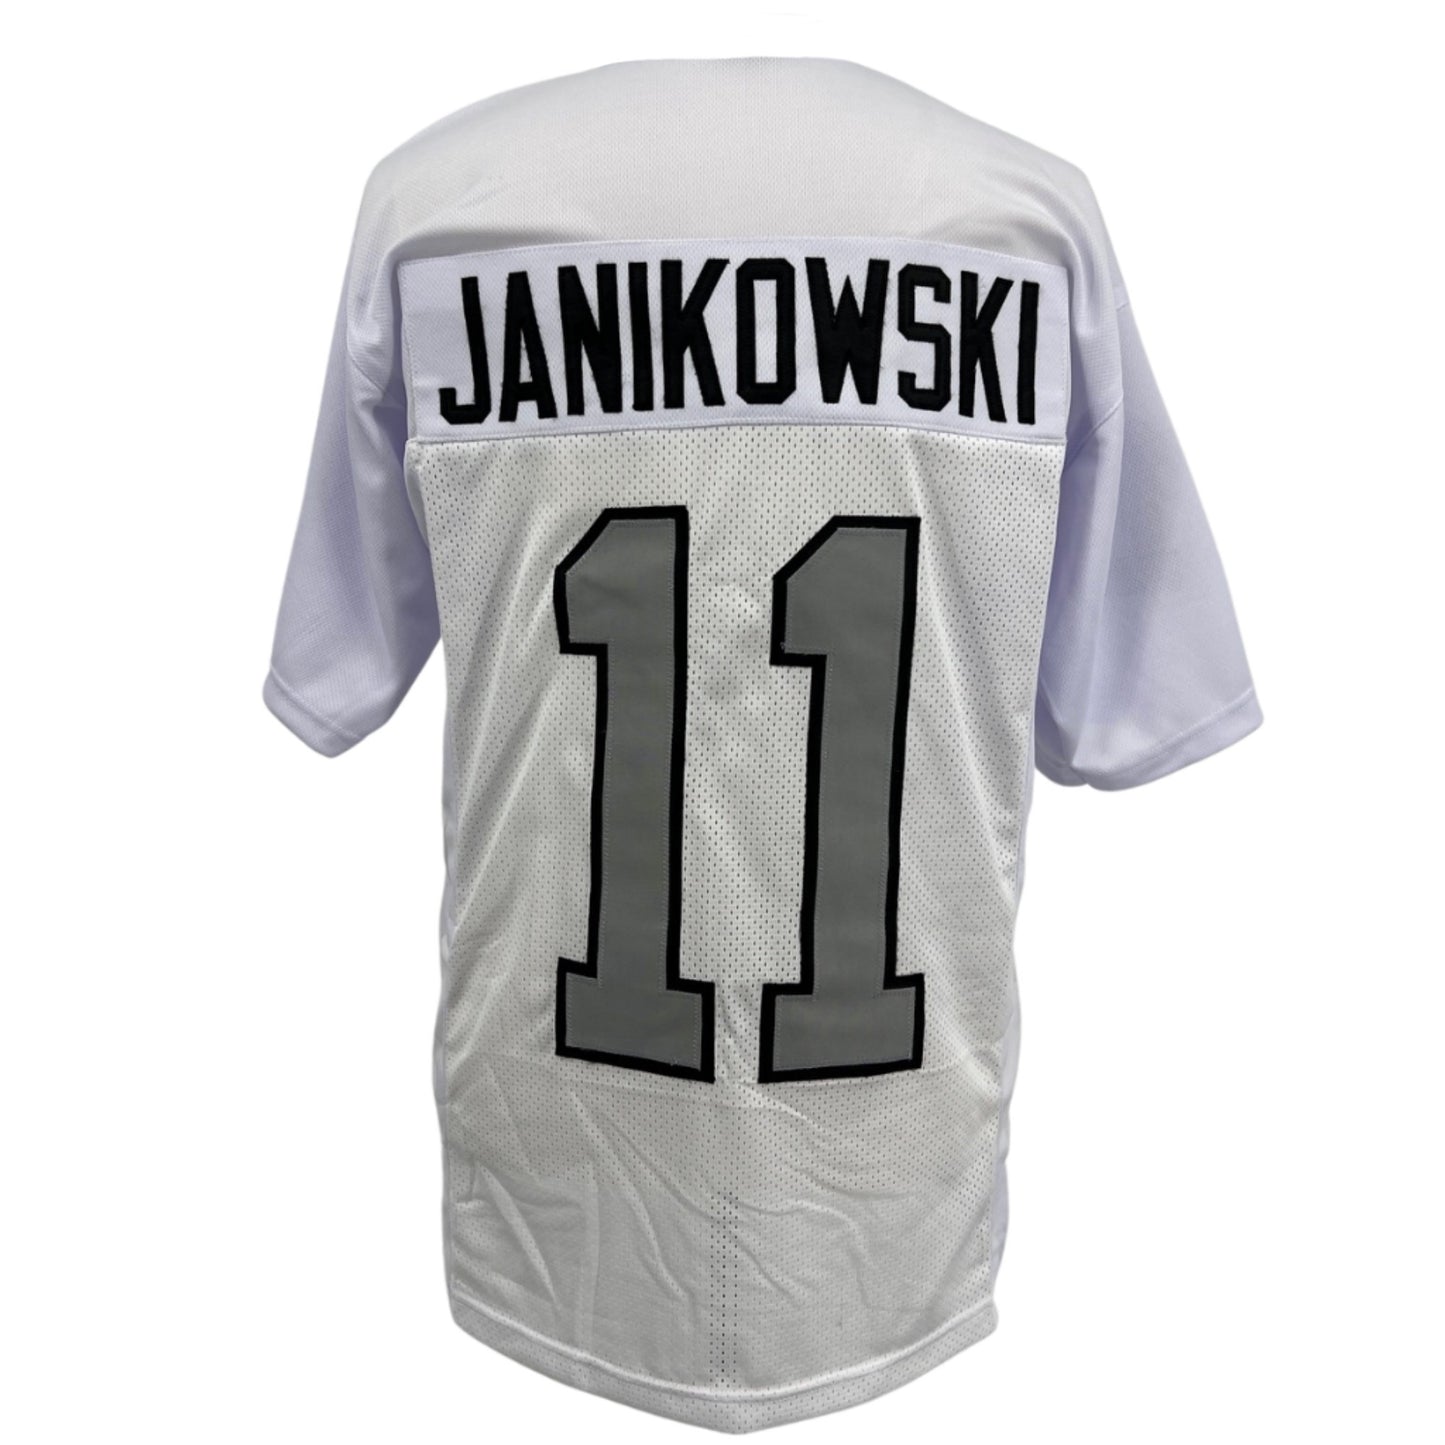 Sebastian Janikowski Jersey White Oakland S/B M-5XL Sewn Stitch